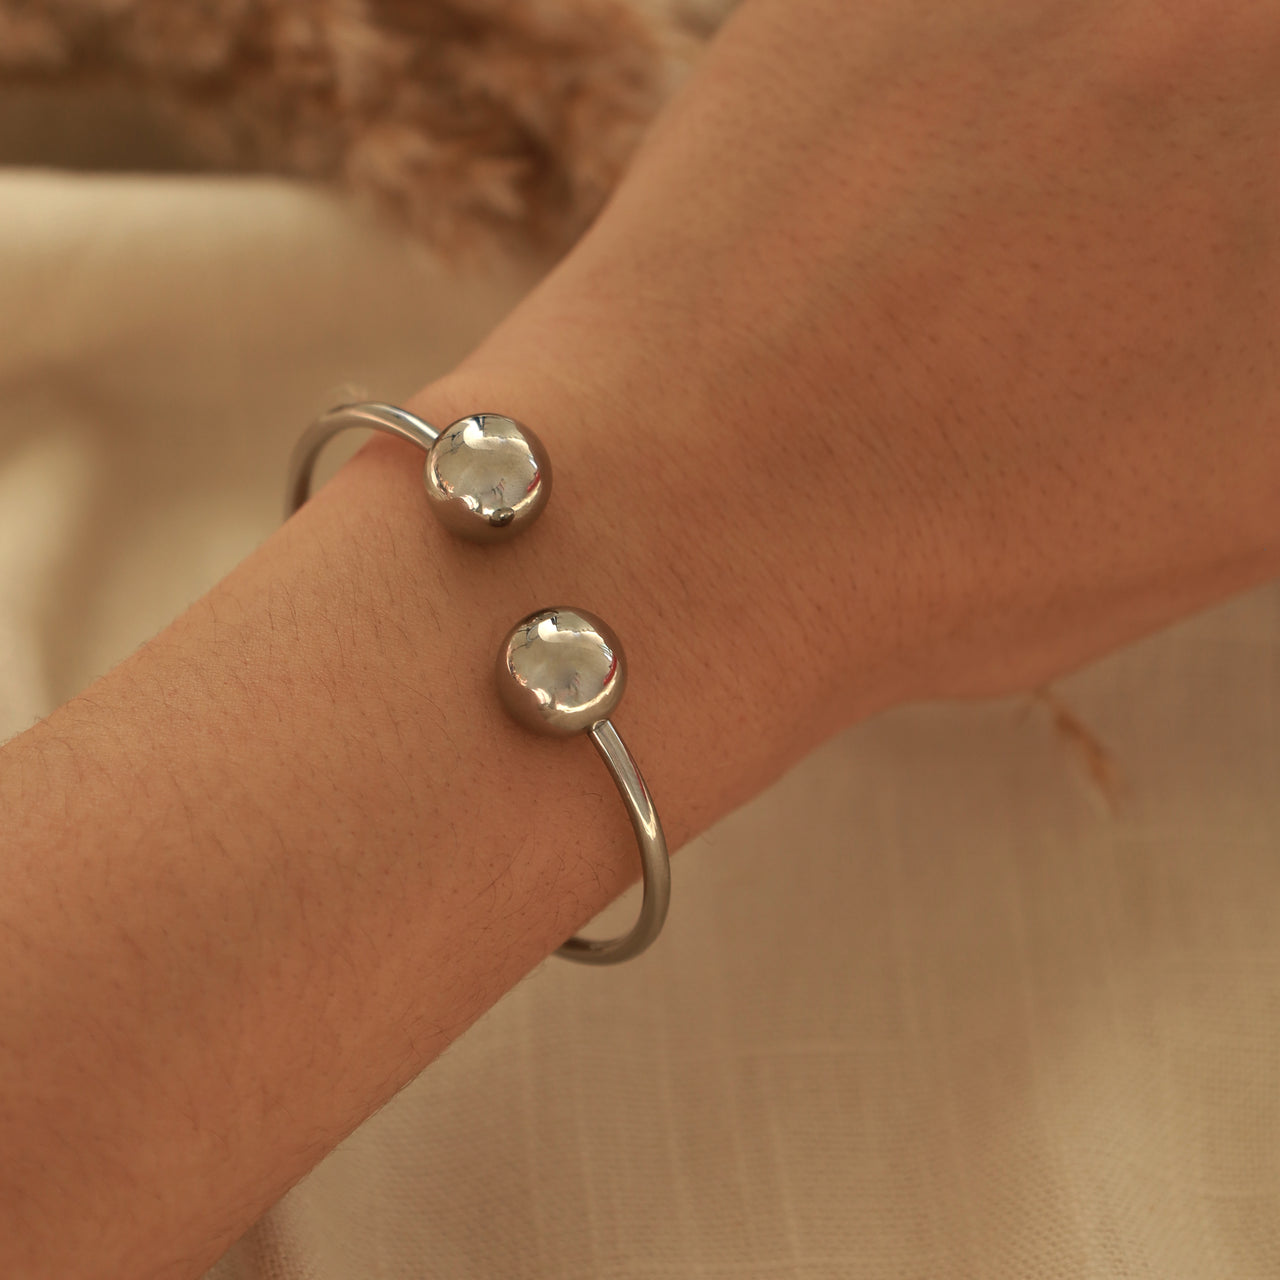 Sarah silver bracelet